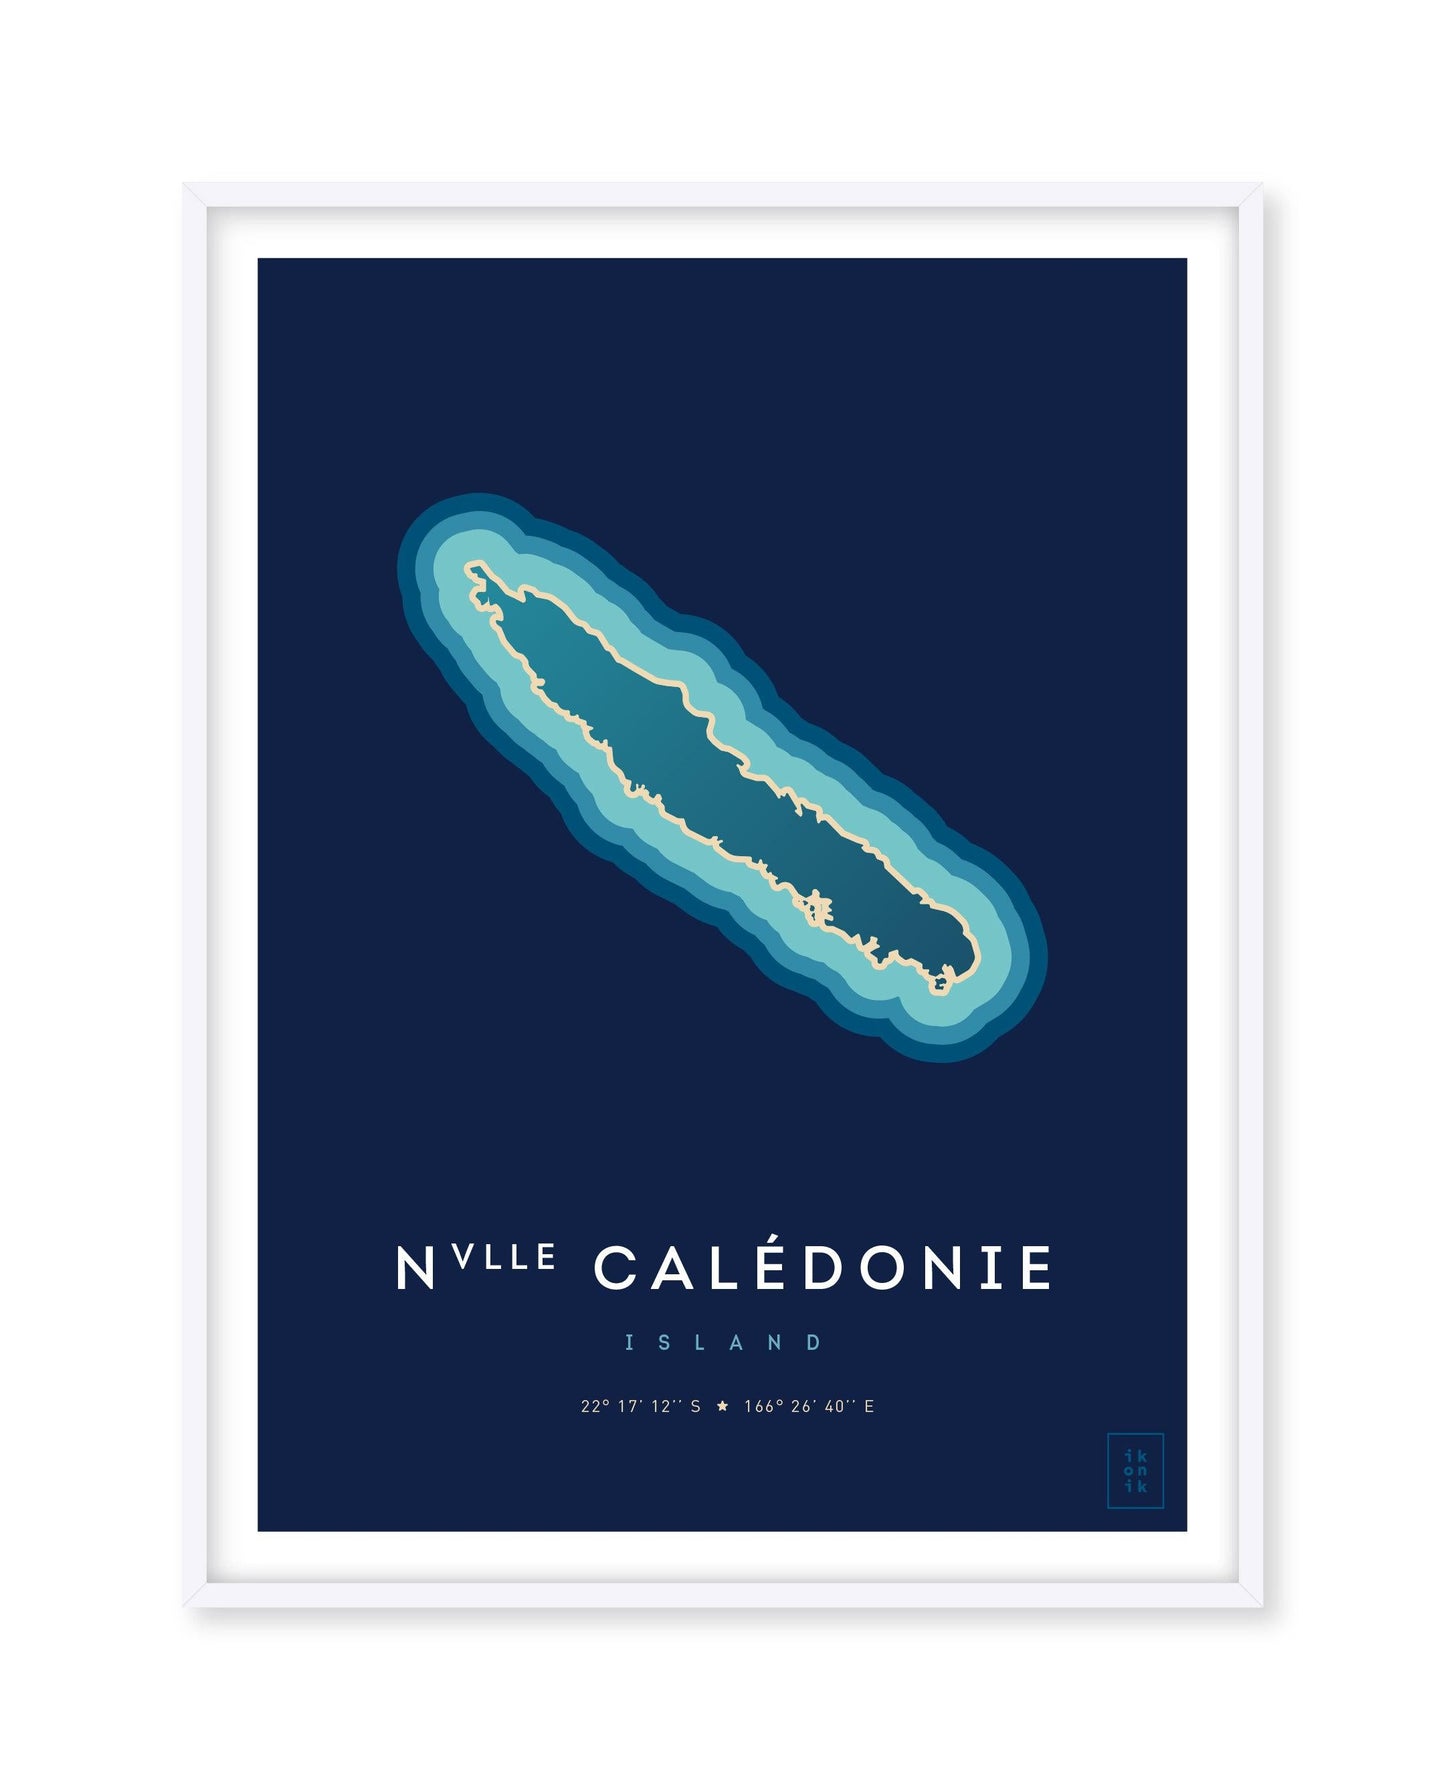 New Caledonia island poster